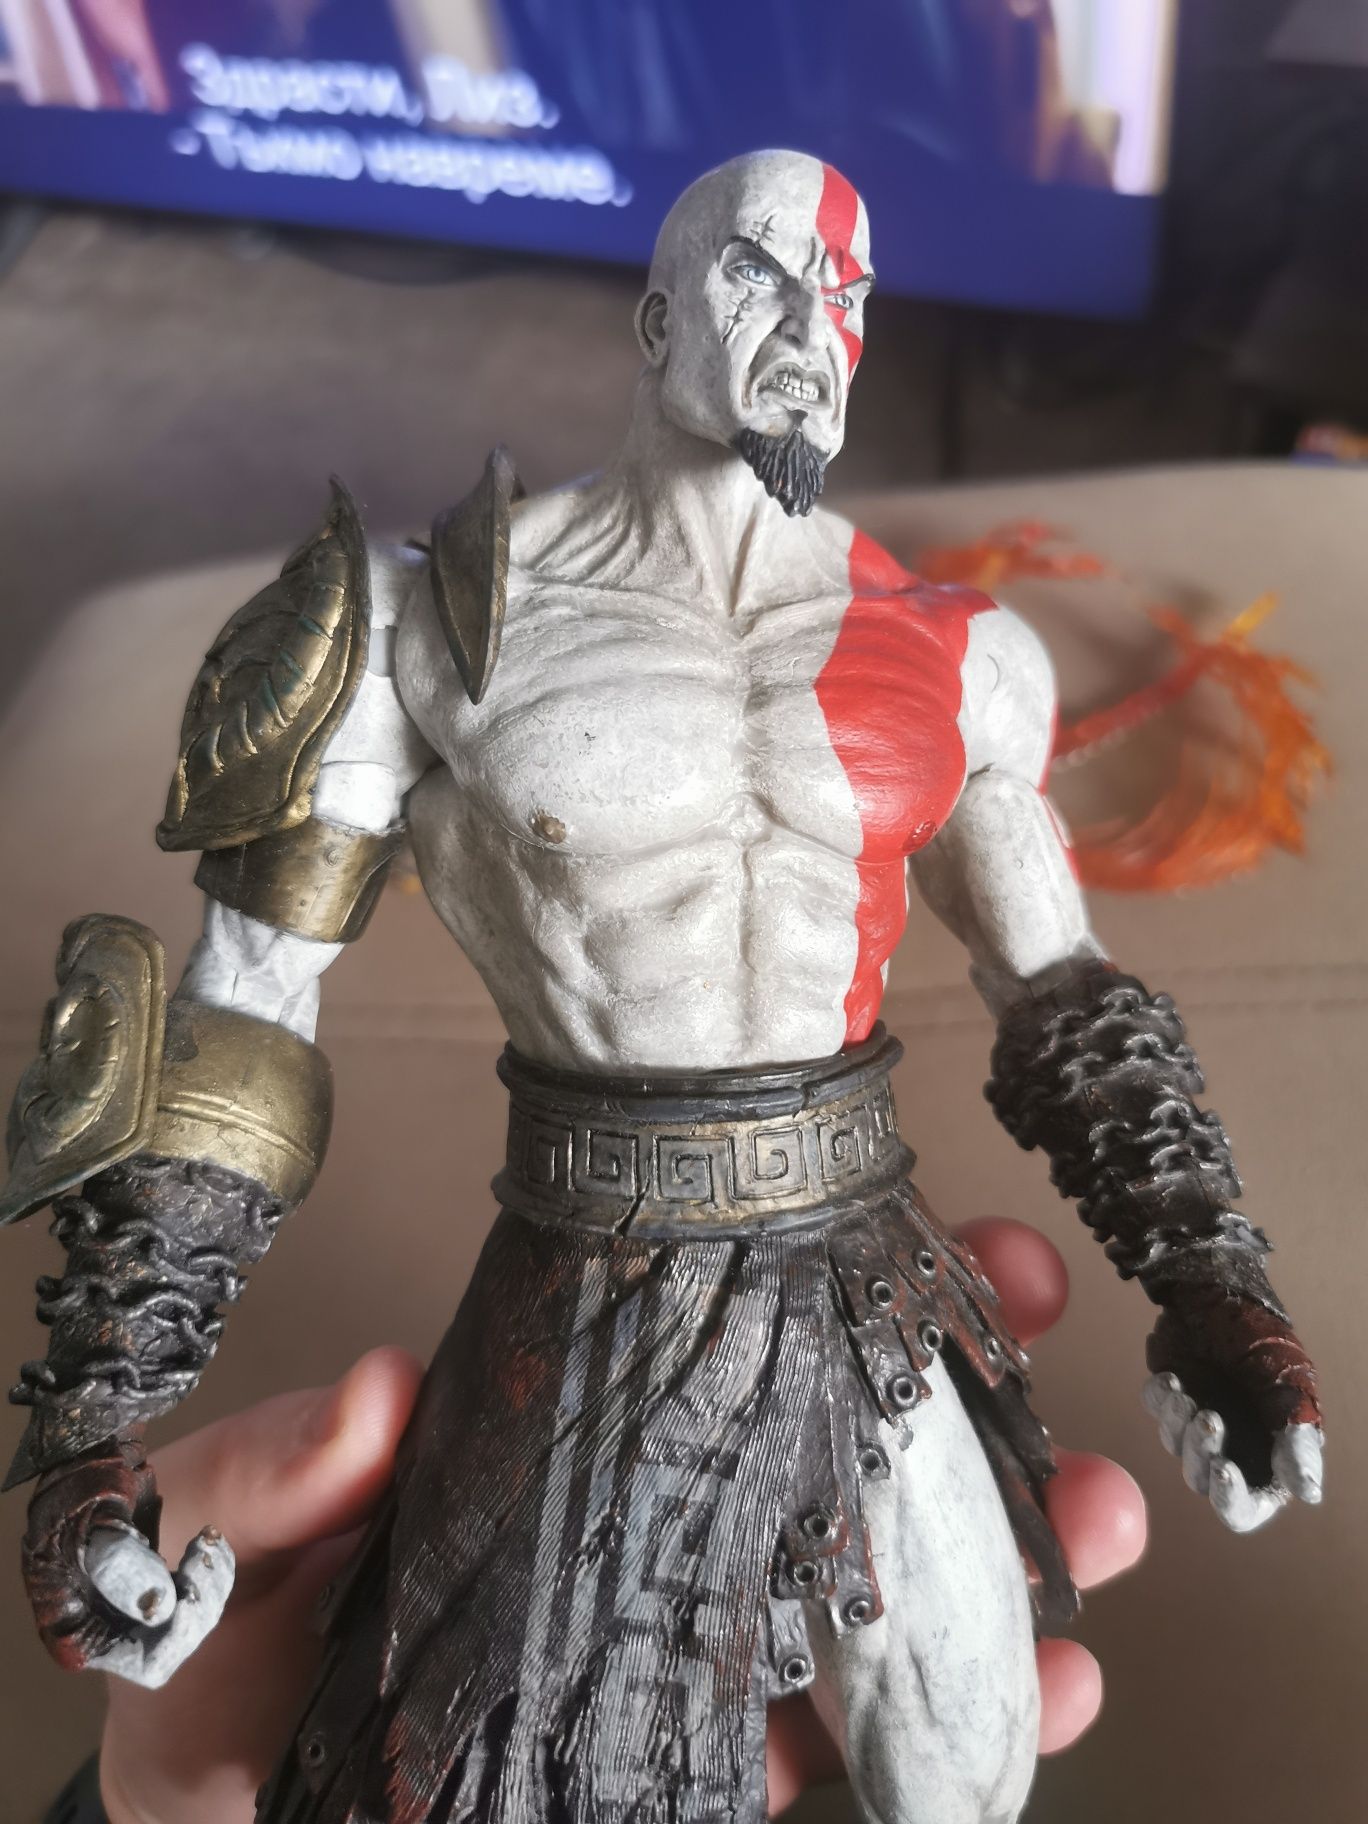 God of War II 12" Kratos Medusa Head Player Select PS2 12 инча